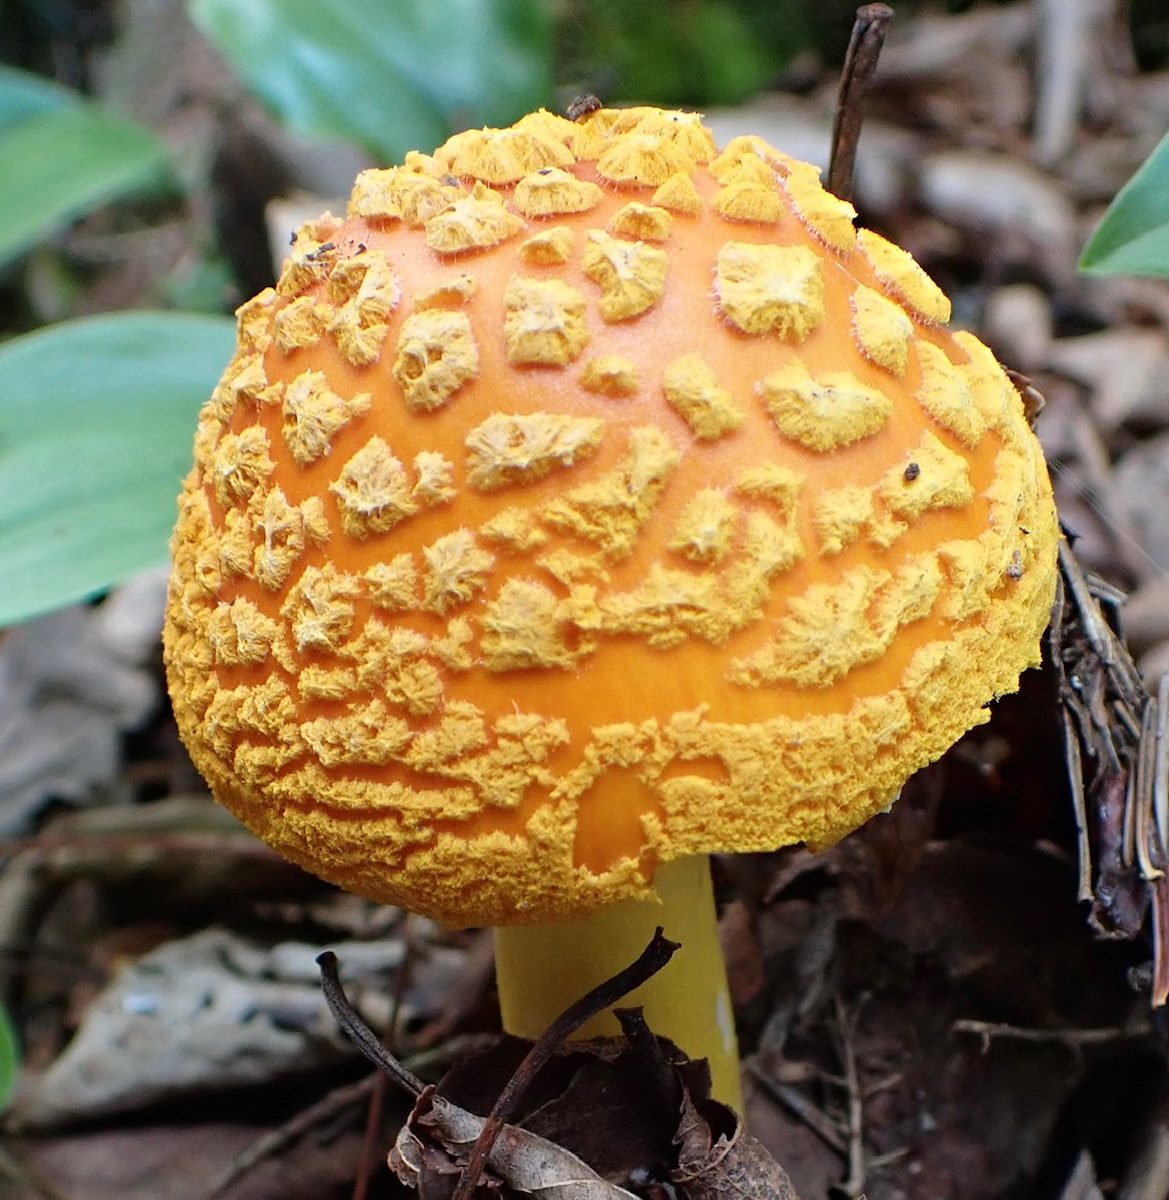 Orange-topped mushroom with light orange "cloud-like" bulges on the dome-shaped cap.